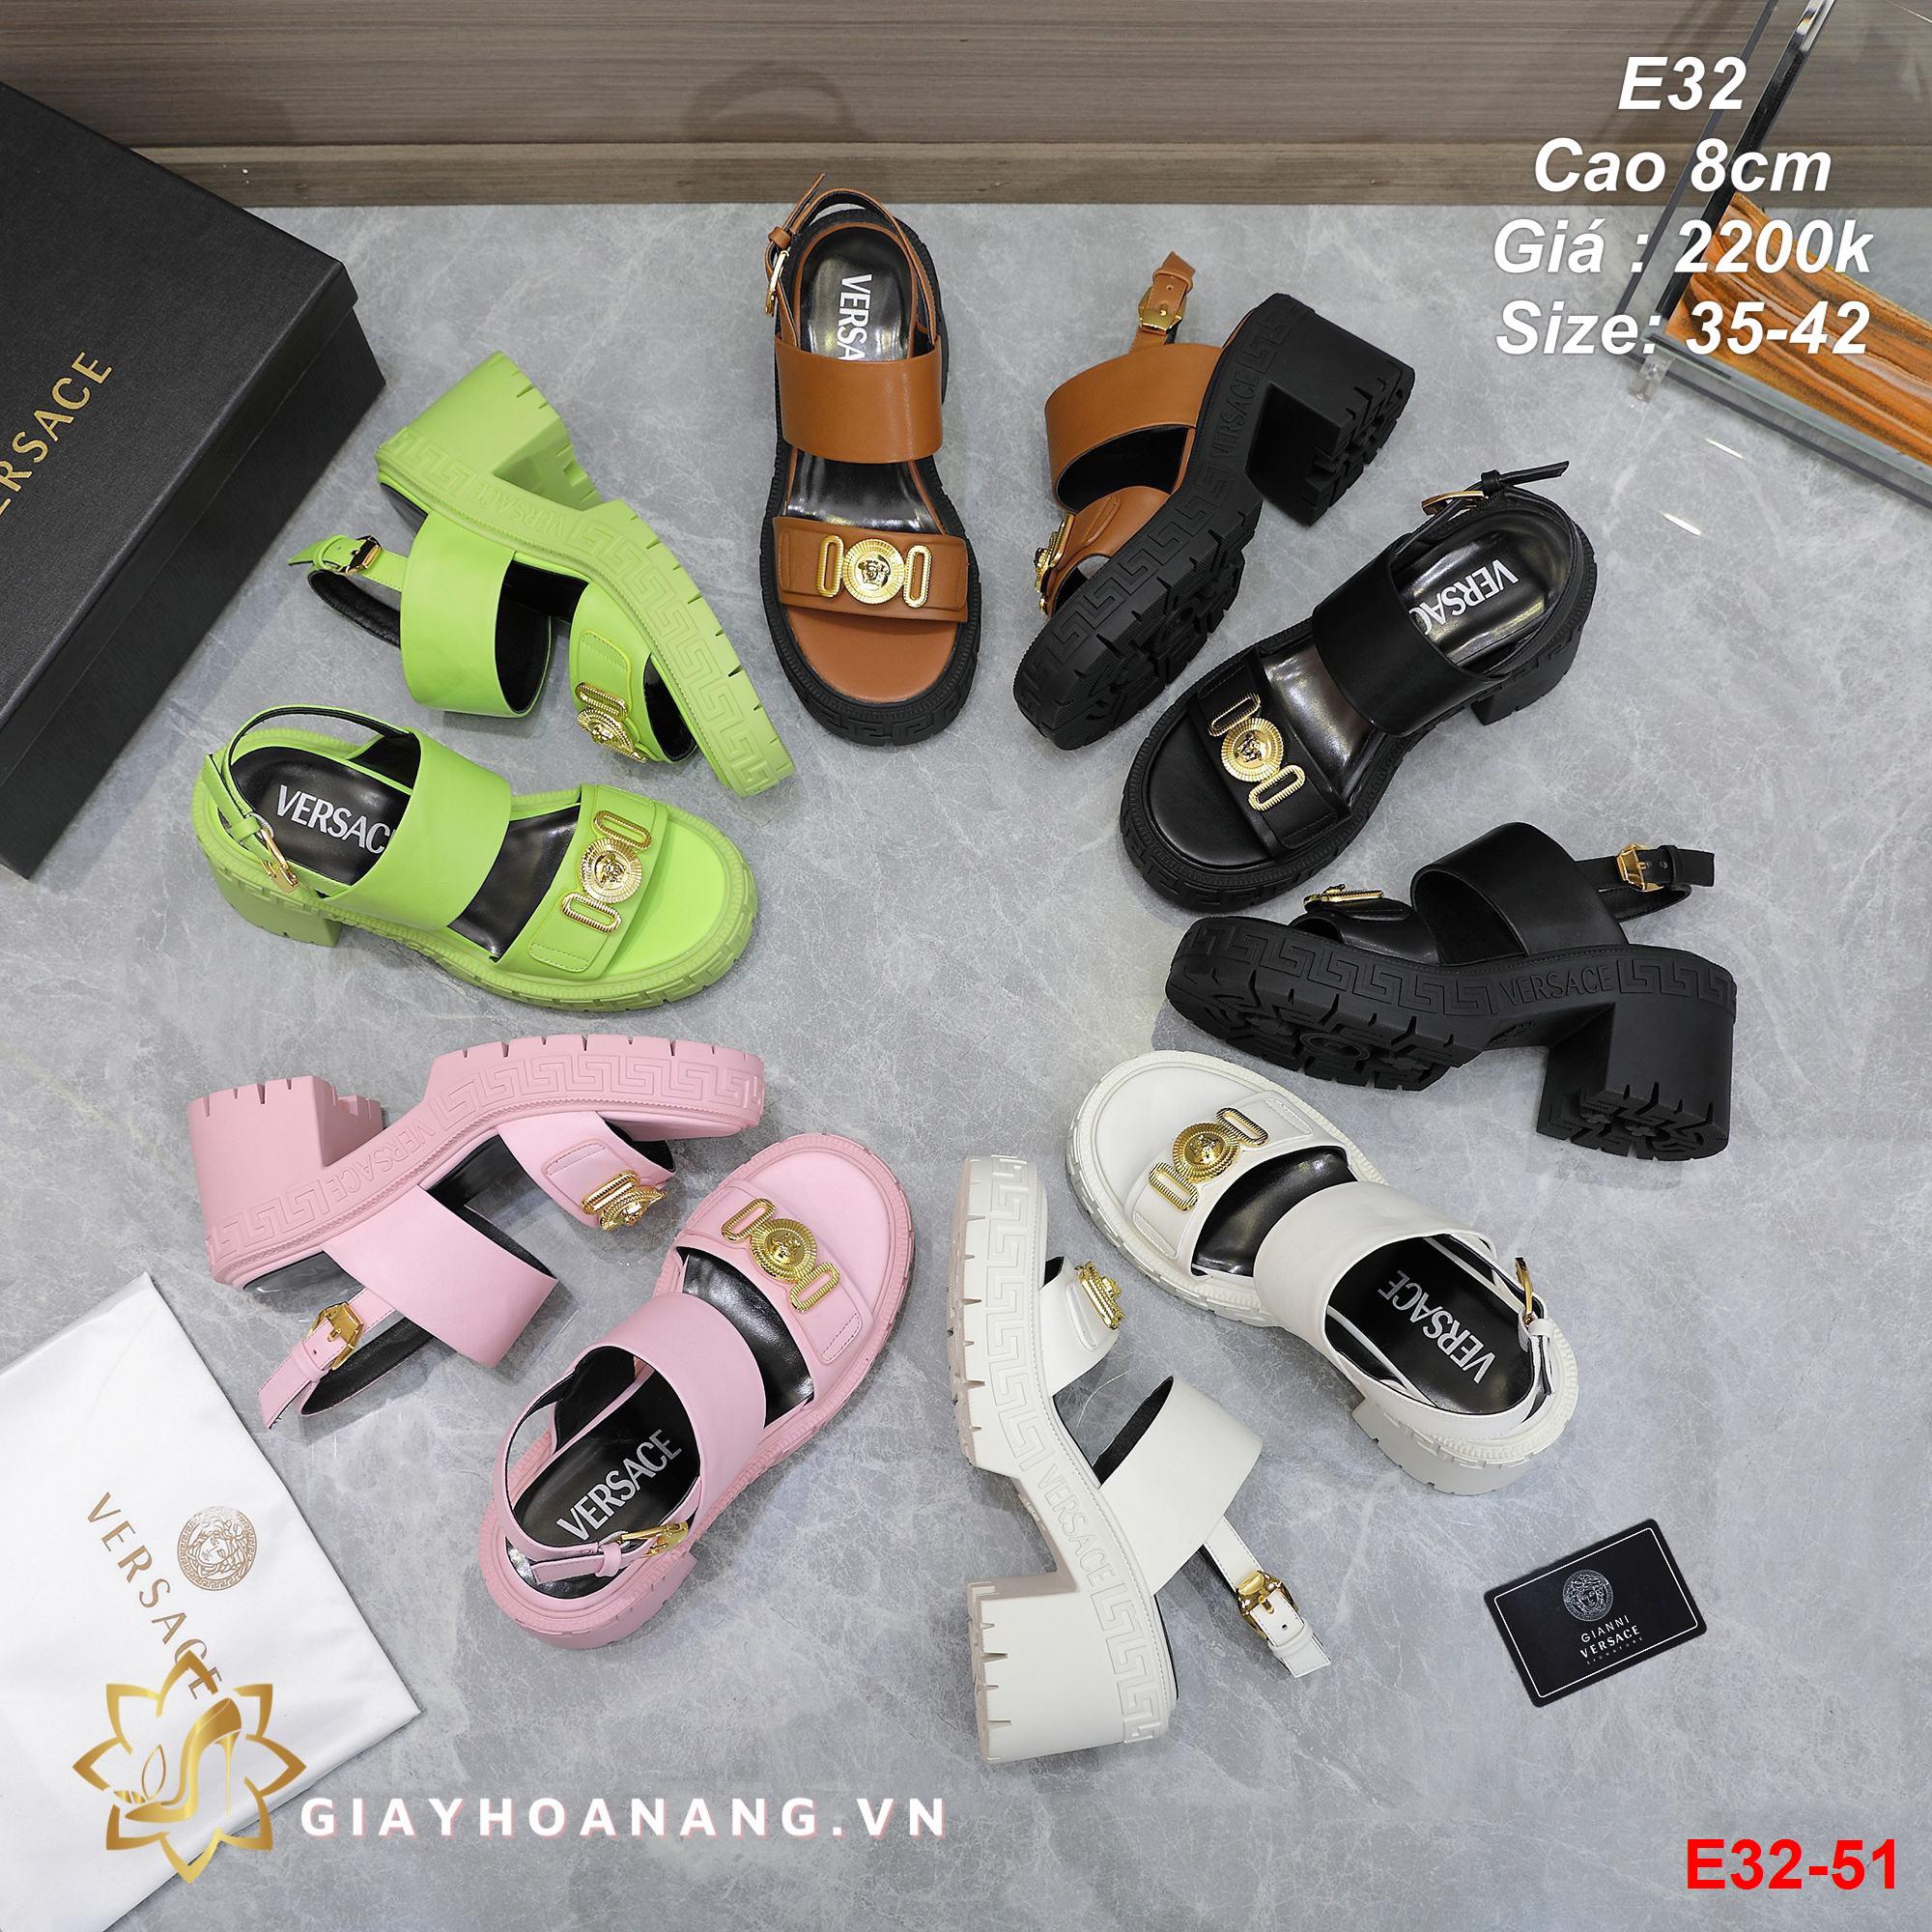 E32-51 Versace sandal cao 8cm siêu cấp